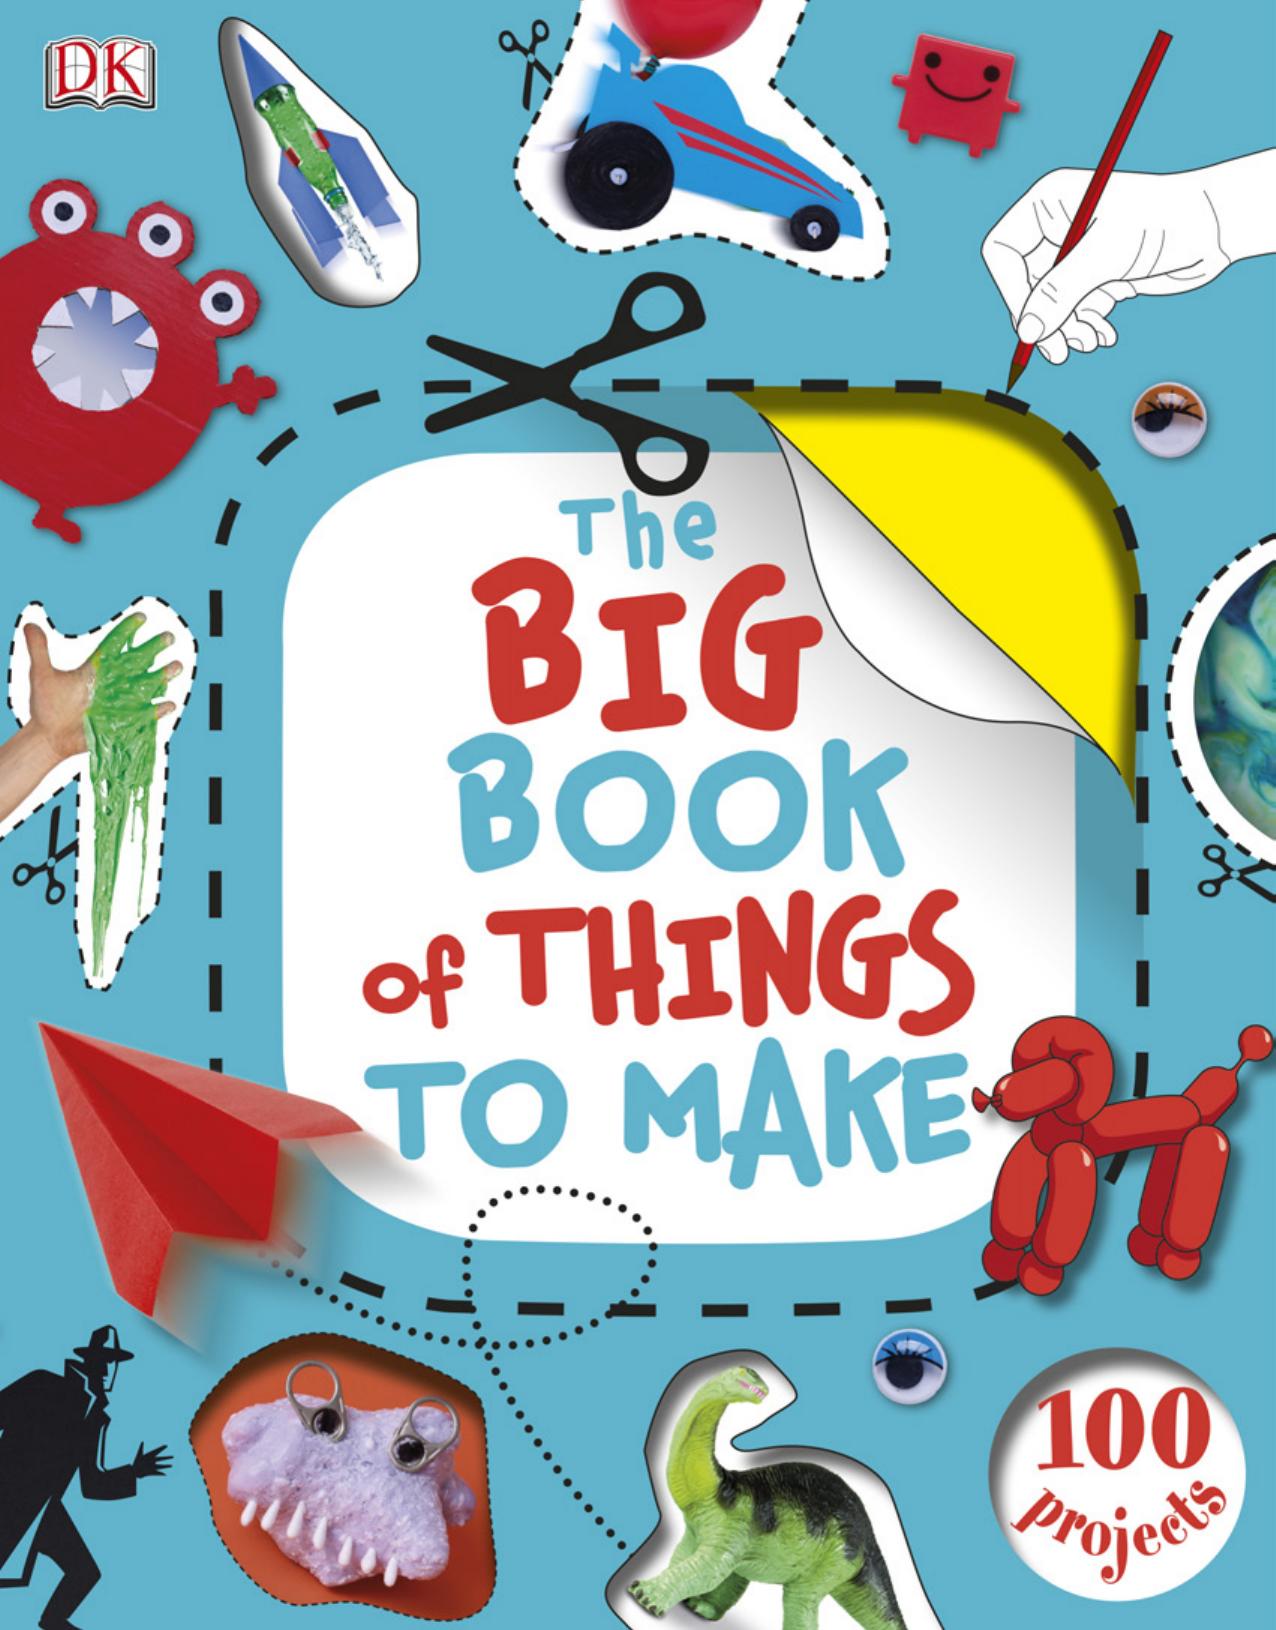 Book is big. Big book. Making things book. Biggest book. Great big book of Families.